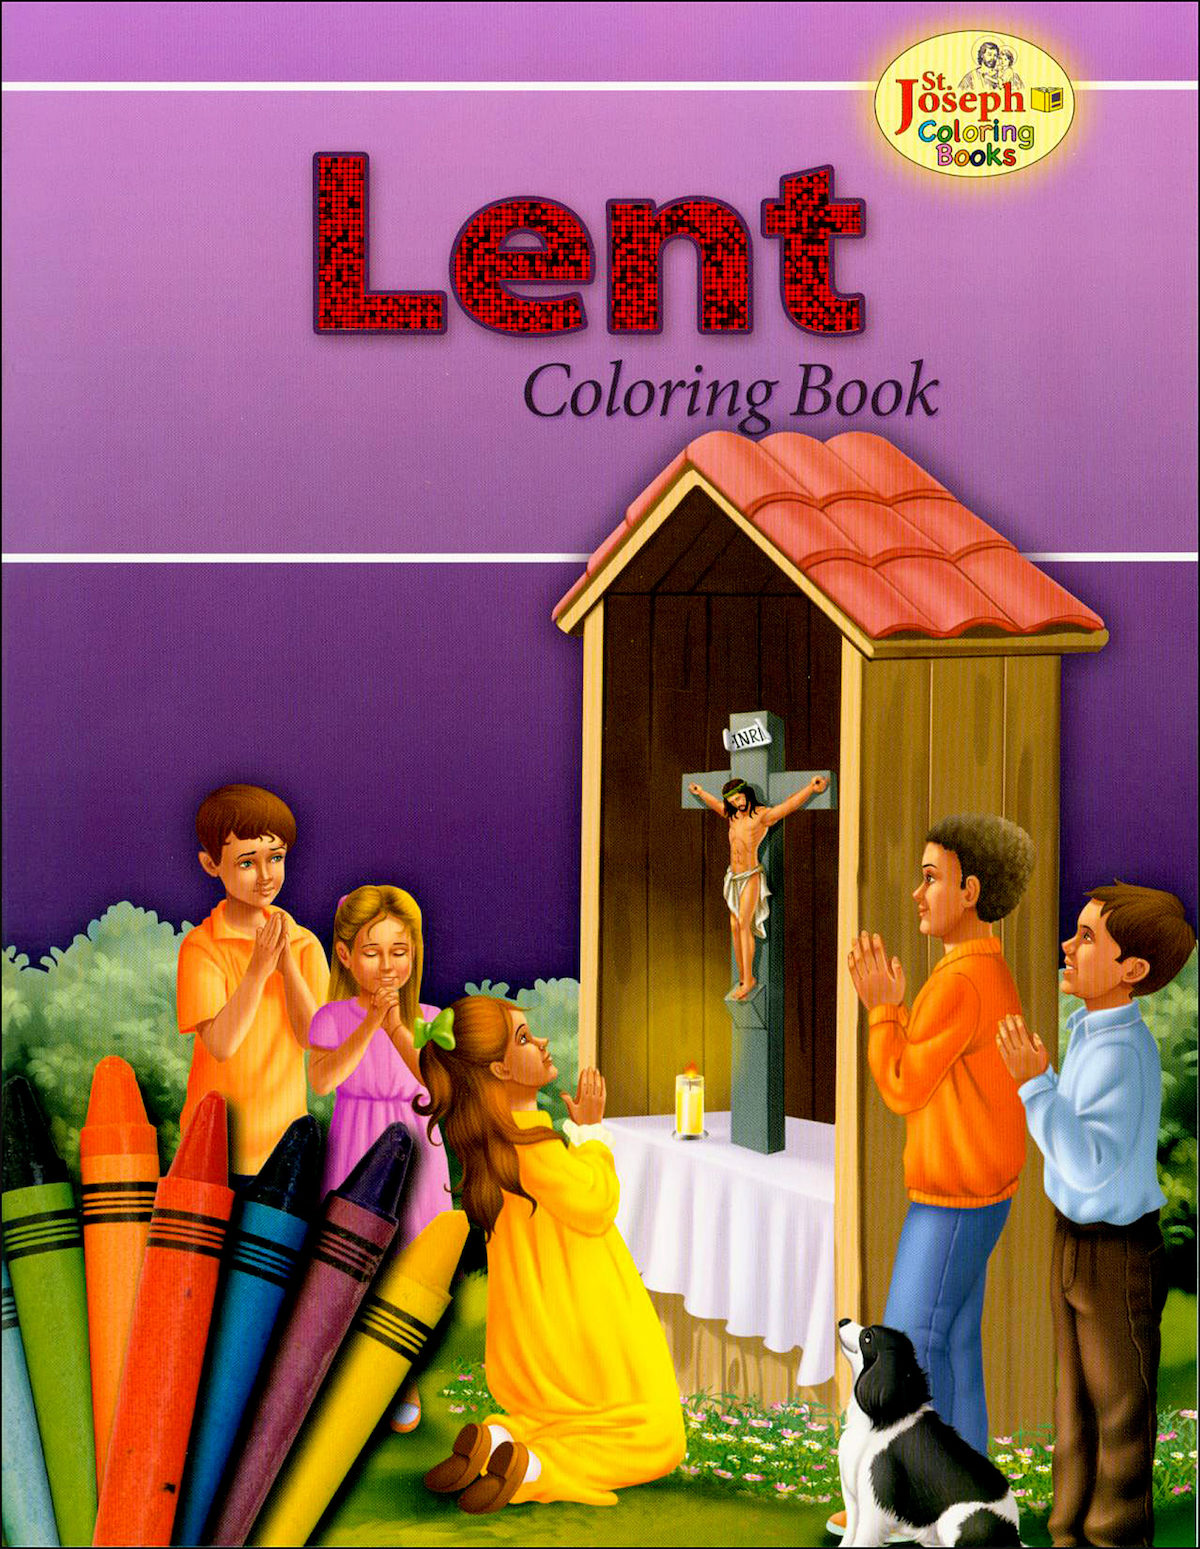 Download St Joseph Coloring Books Coloring Book About Lent Comcenter Com Cat